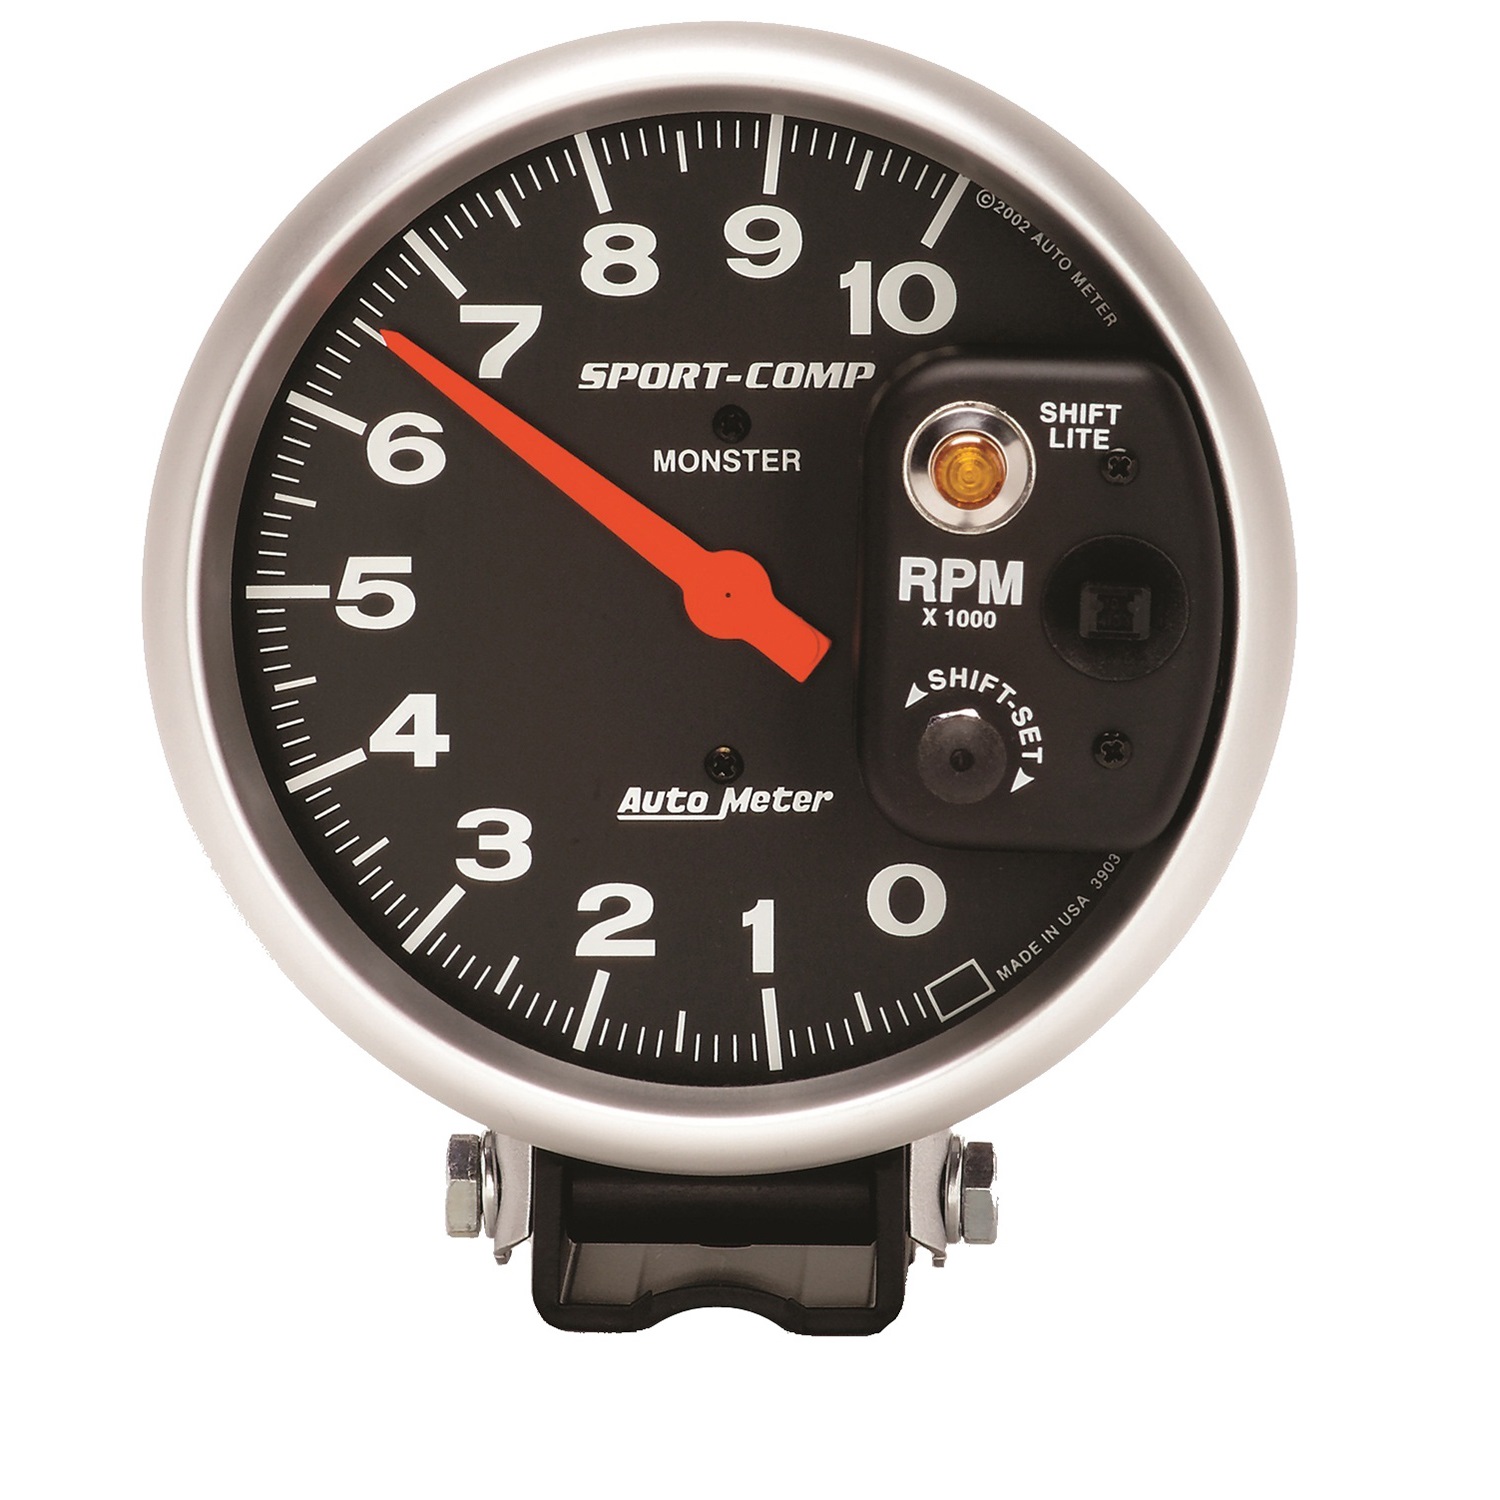 Auto Meter Auto Meter 3903 Sport-Comp; Shift-Lite Tachometer